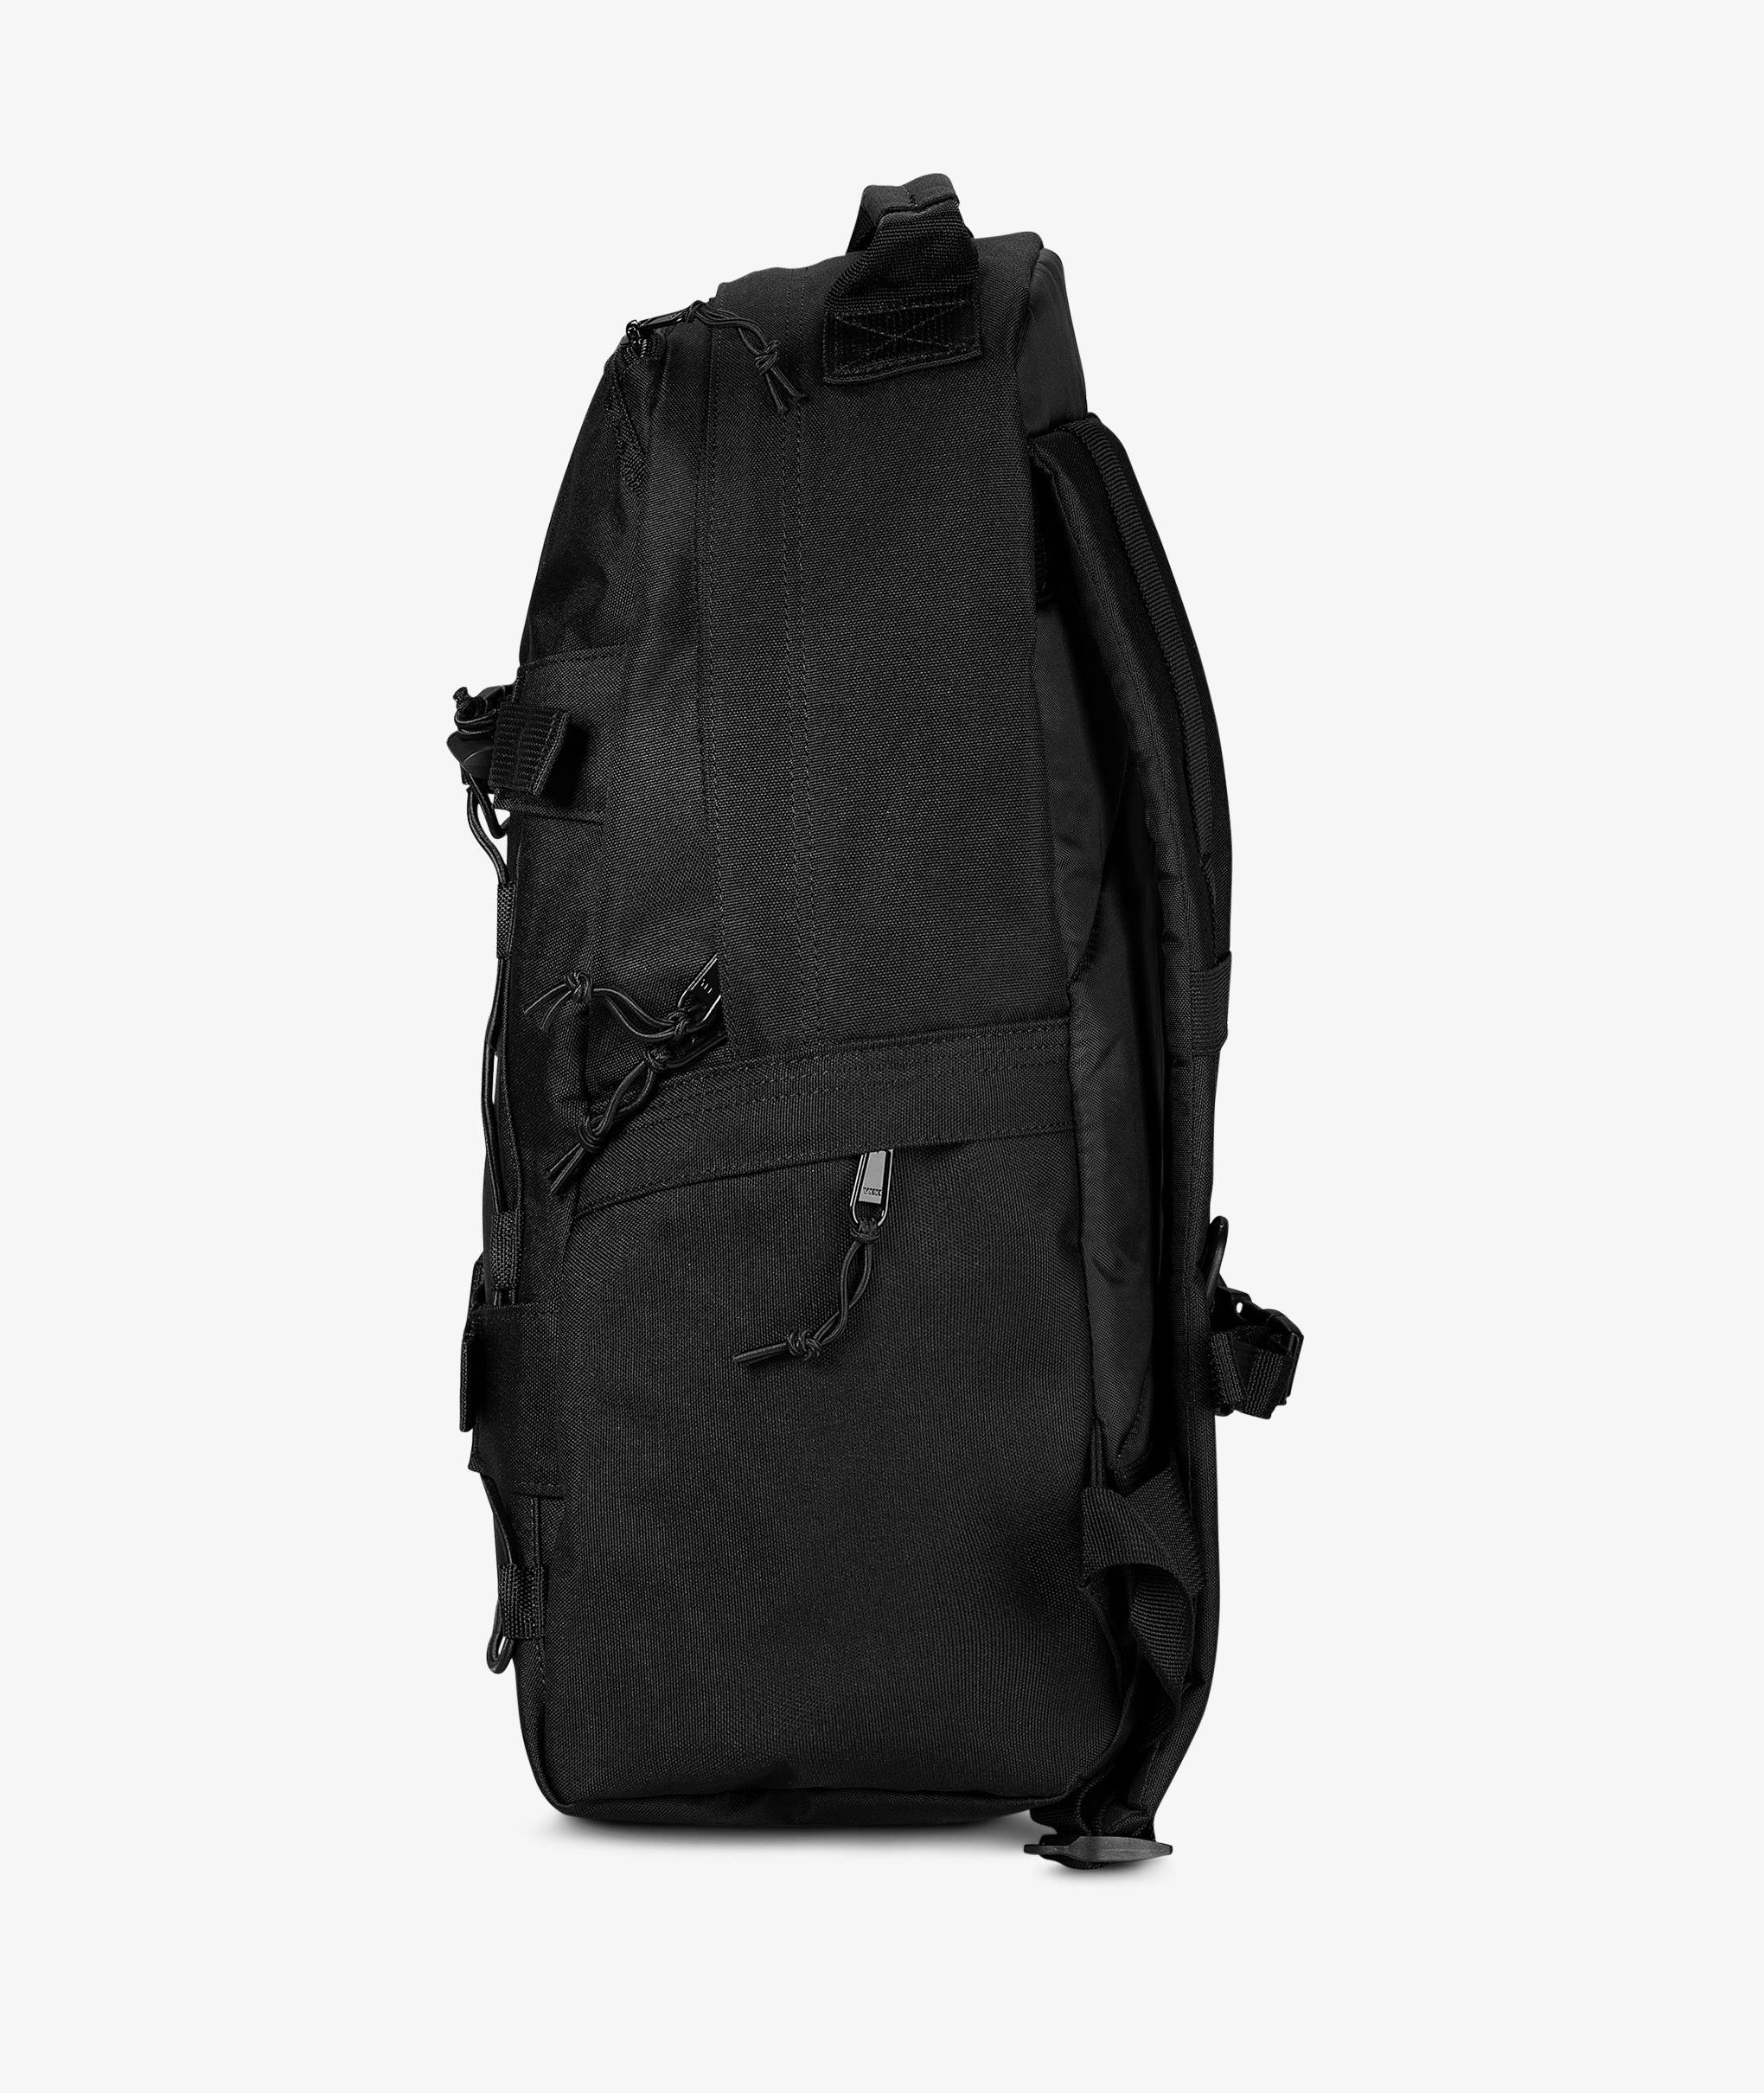 Norse Store | Shipping Worldwide - Carhartt WIP Kickflip Backpack - Black